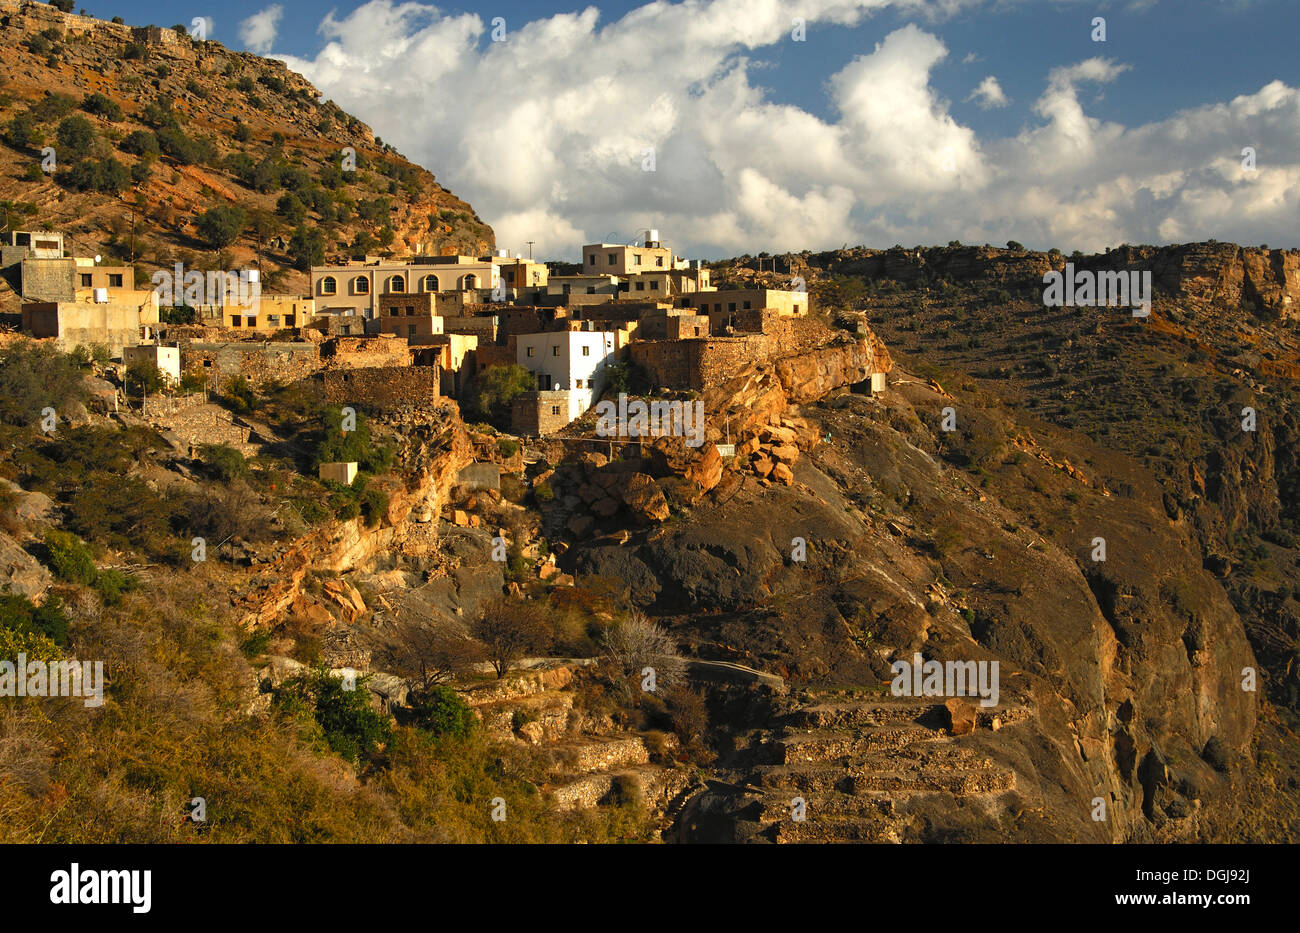 The village of Al Aqor on the upper level of the Saiq Plateau, Jebel al Alkhdar, Al Hajar Mountains, Sultanate of Oman Stock Photo